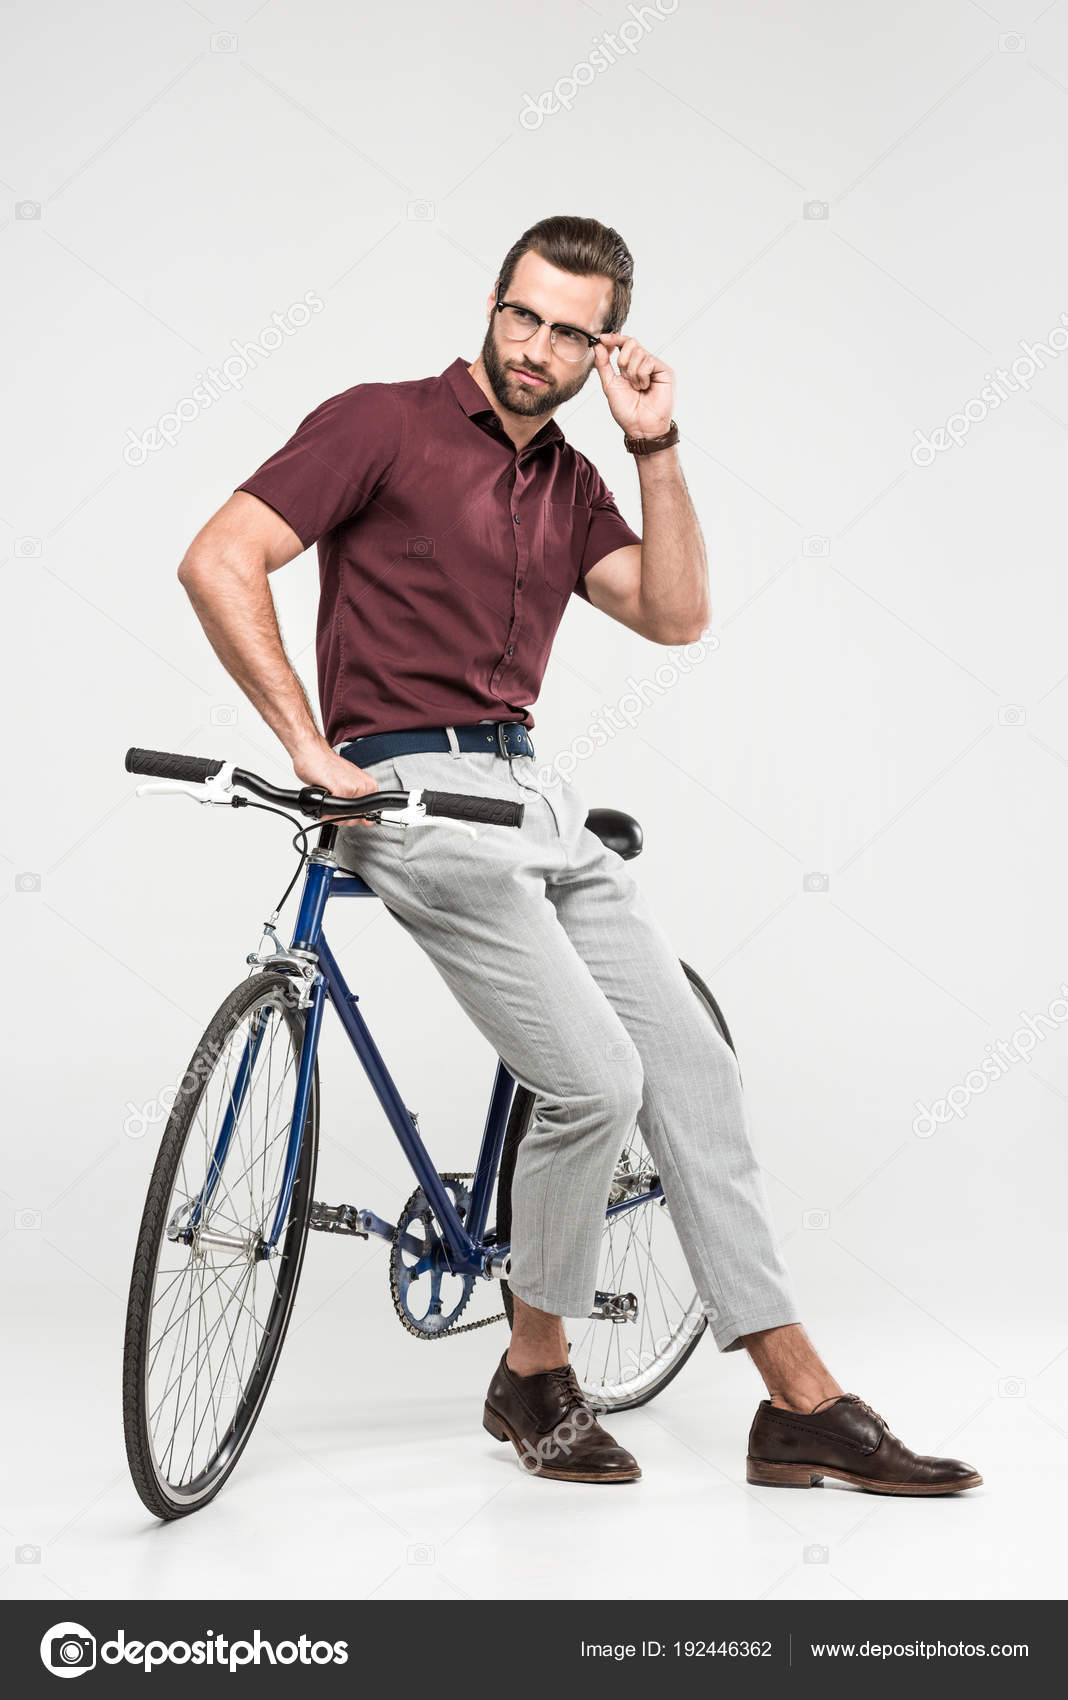 Riding Bike pose - CLIP STUDIO ASSETS